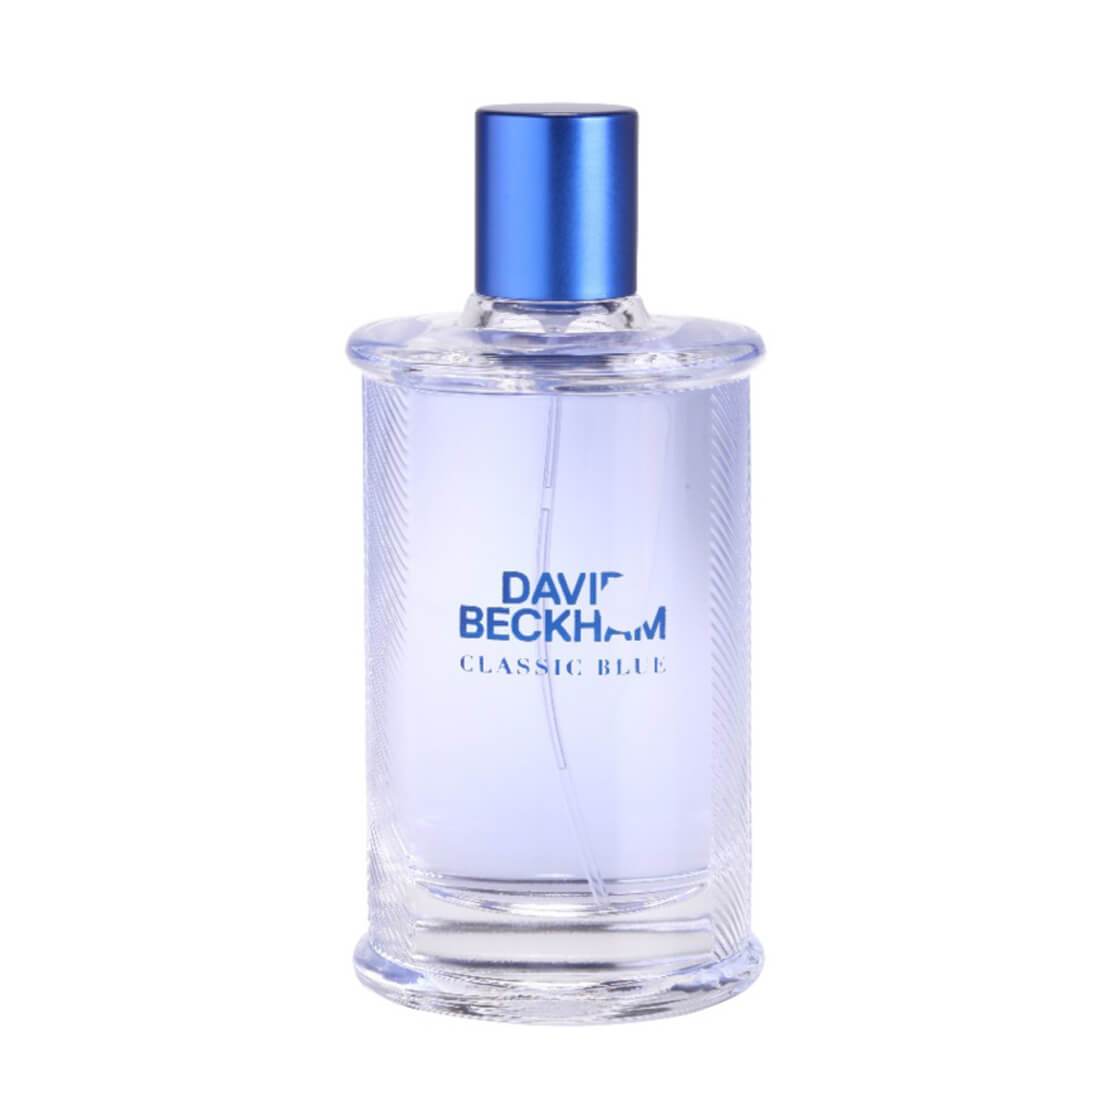 David Beckham Classic Blue EDT Perfume - 90ml